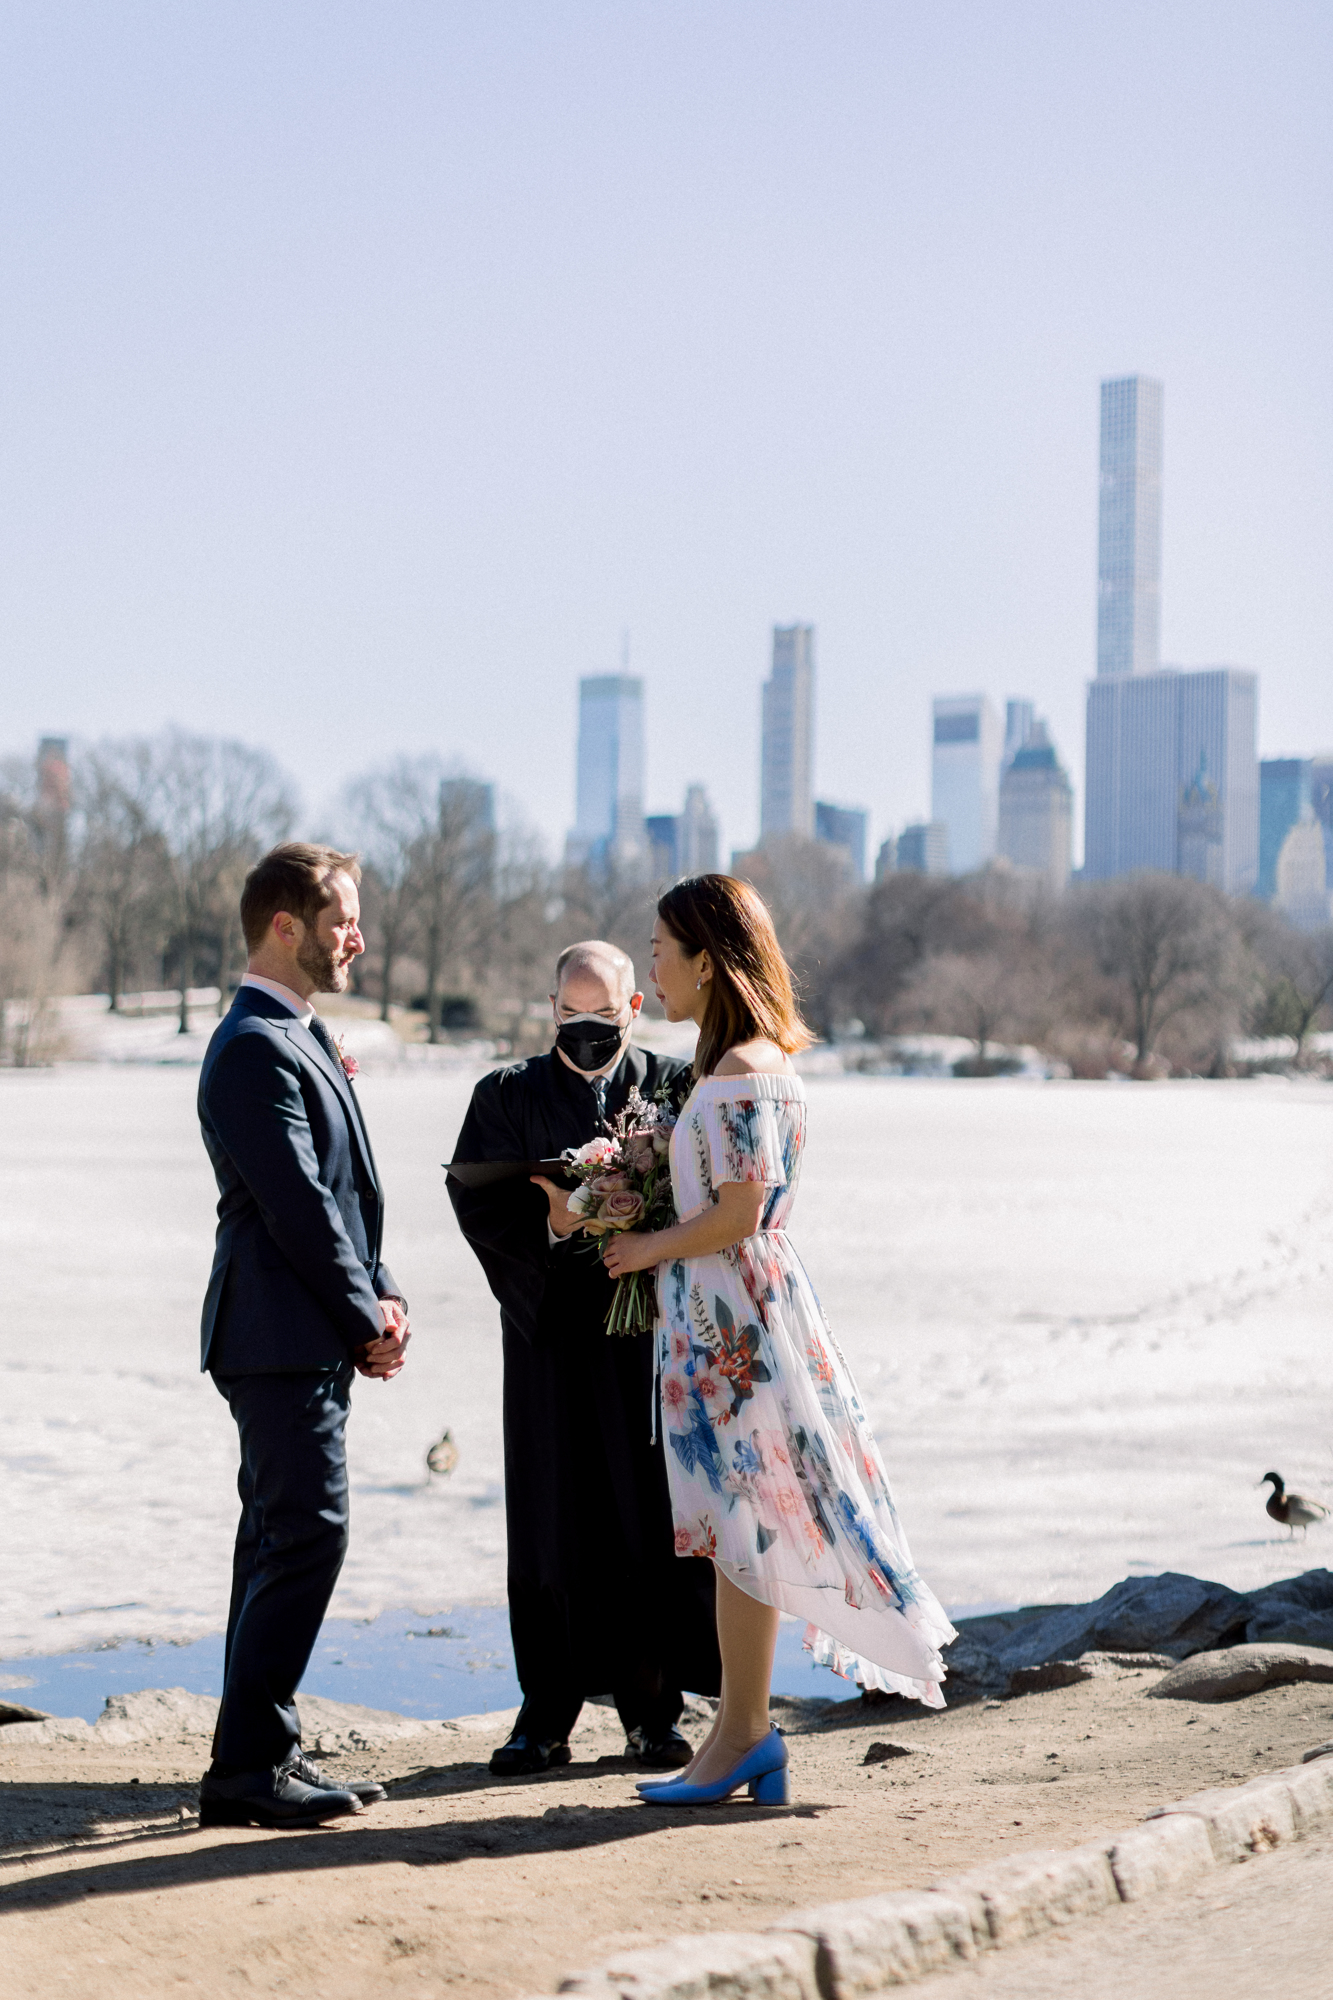 Graceful Central Park Wedding Photos in Wintery New York